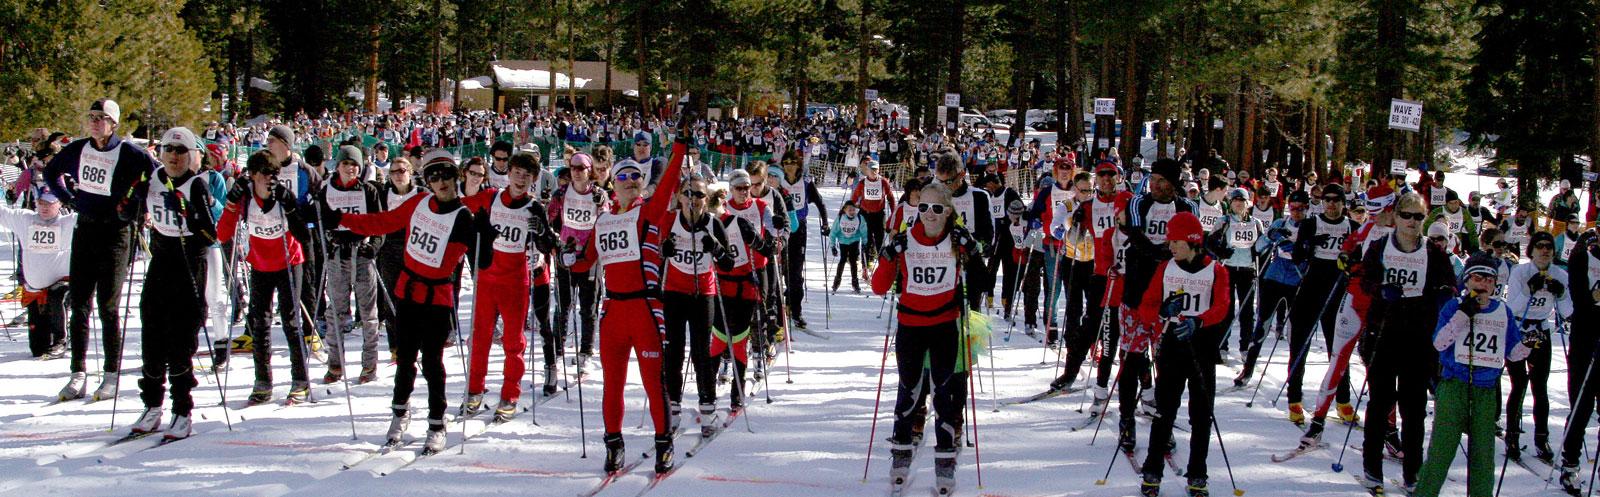 The Great Ski Race 2016